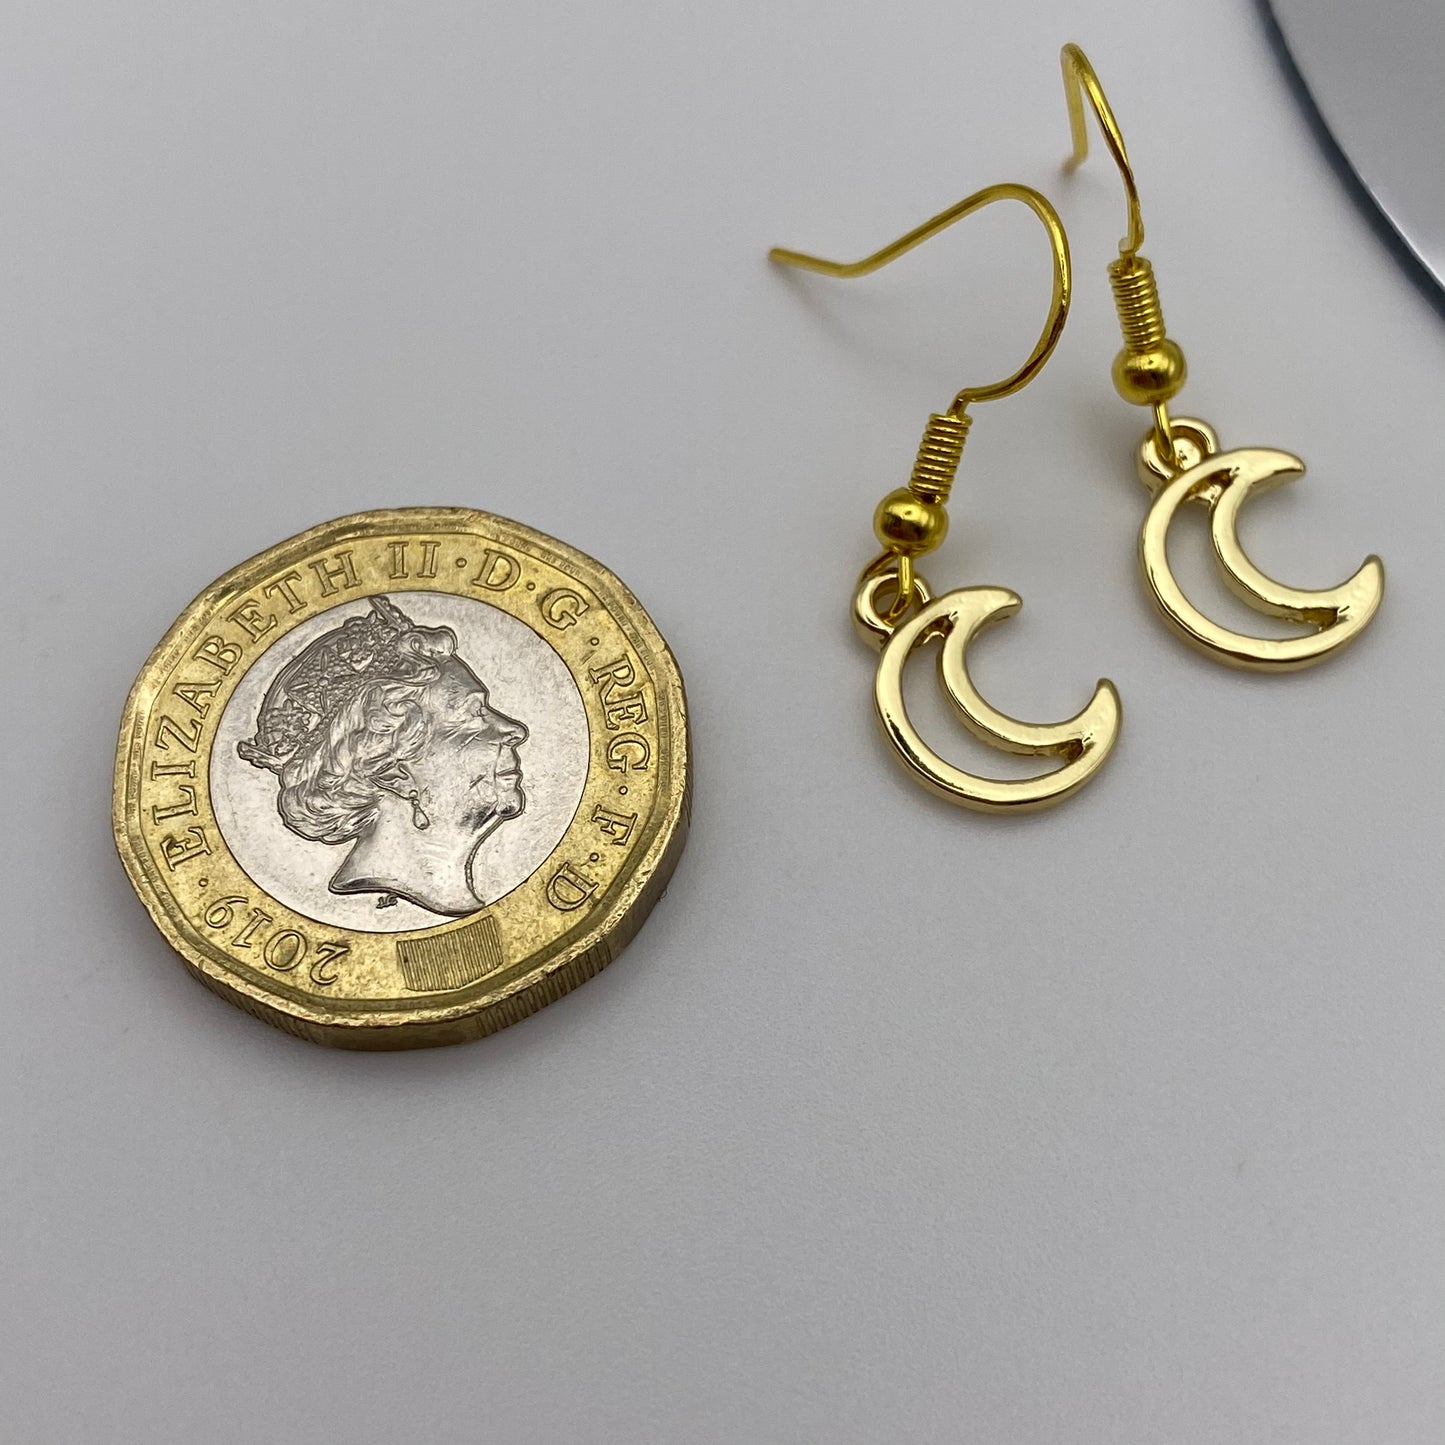 Small Gold Moon Earrings